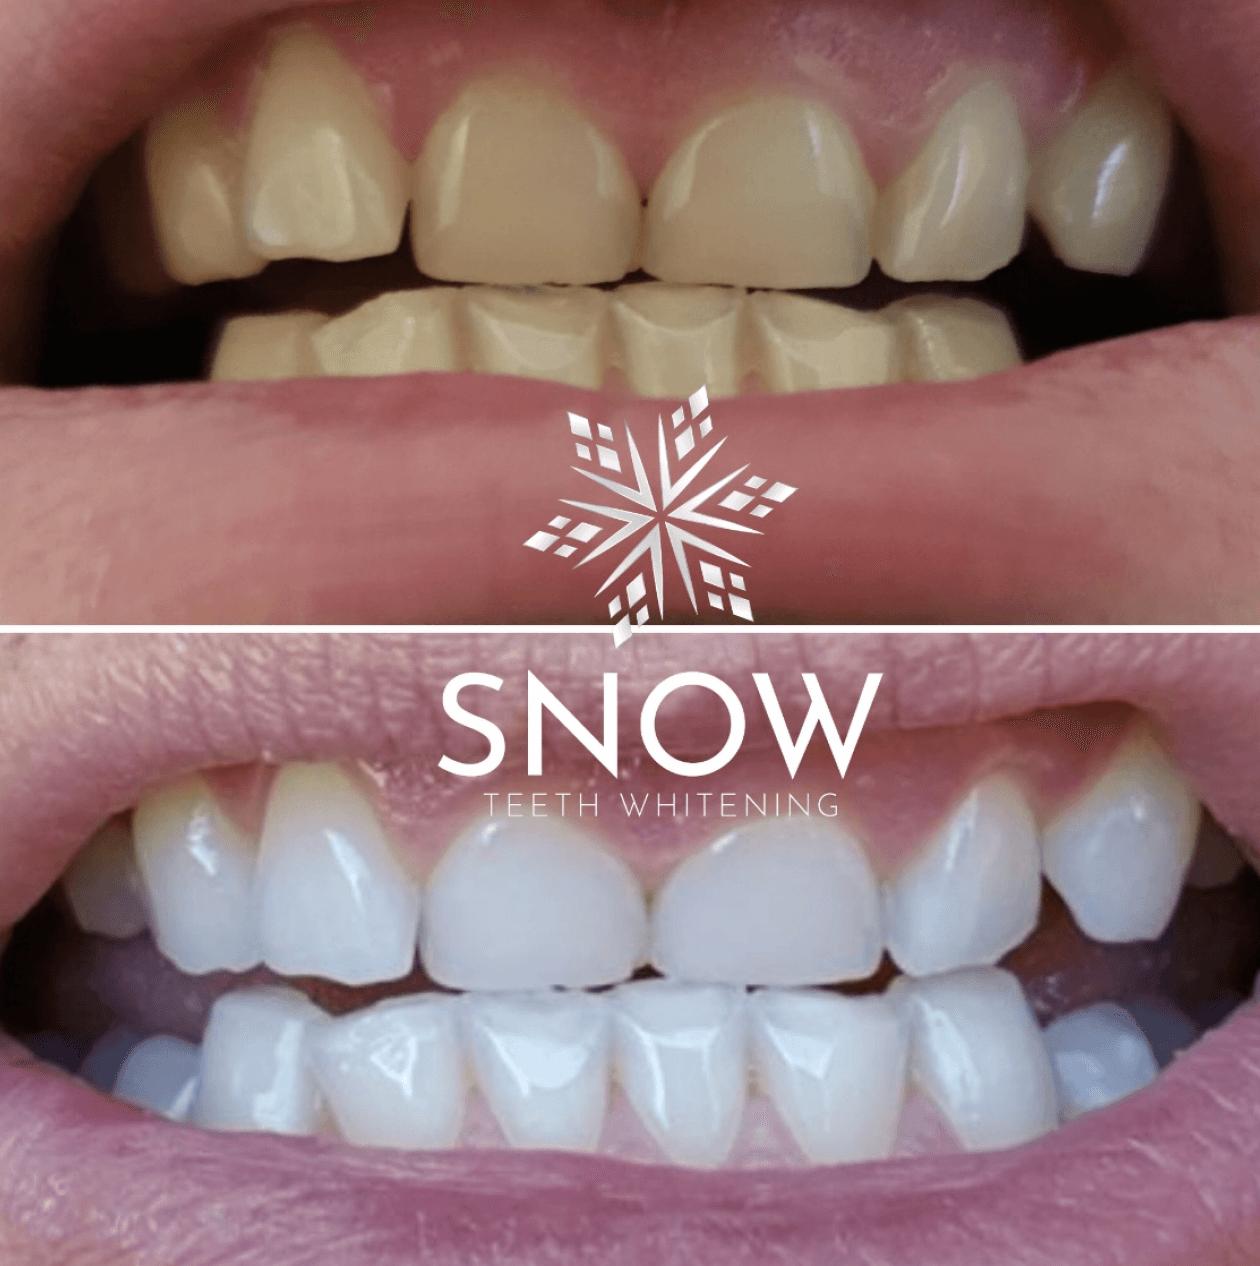 Does Snow Teeth Whitening Work?